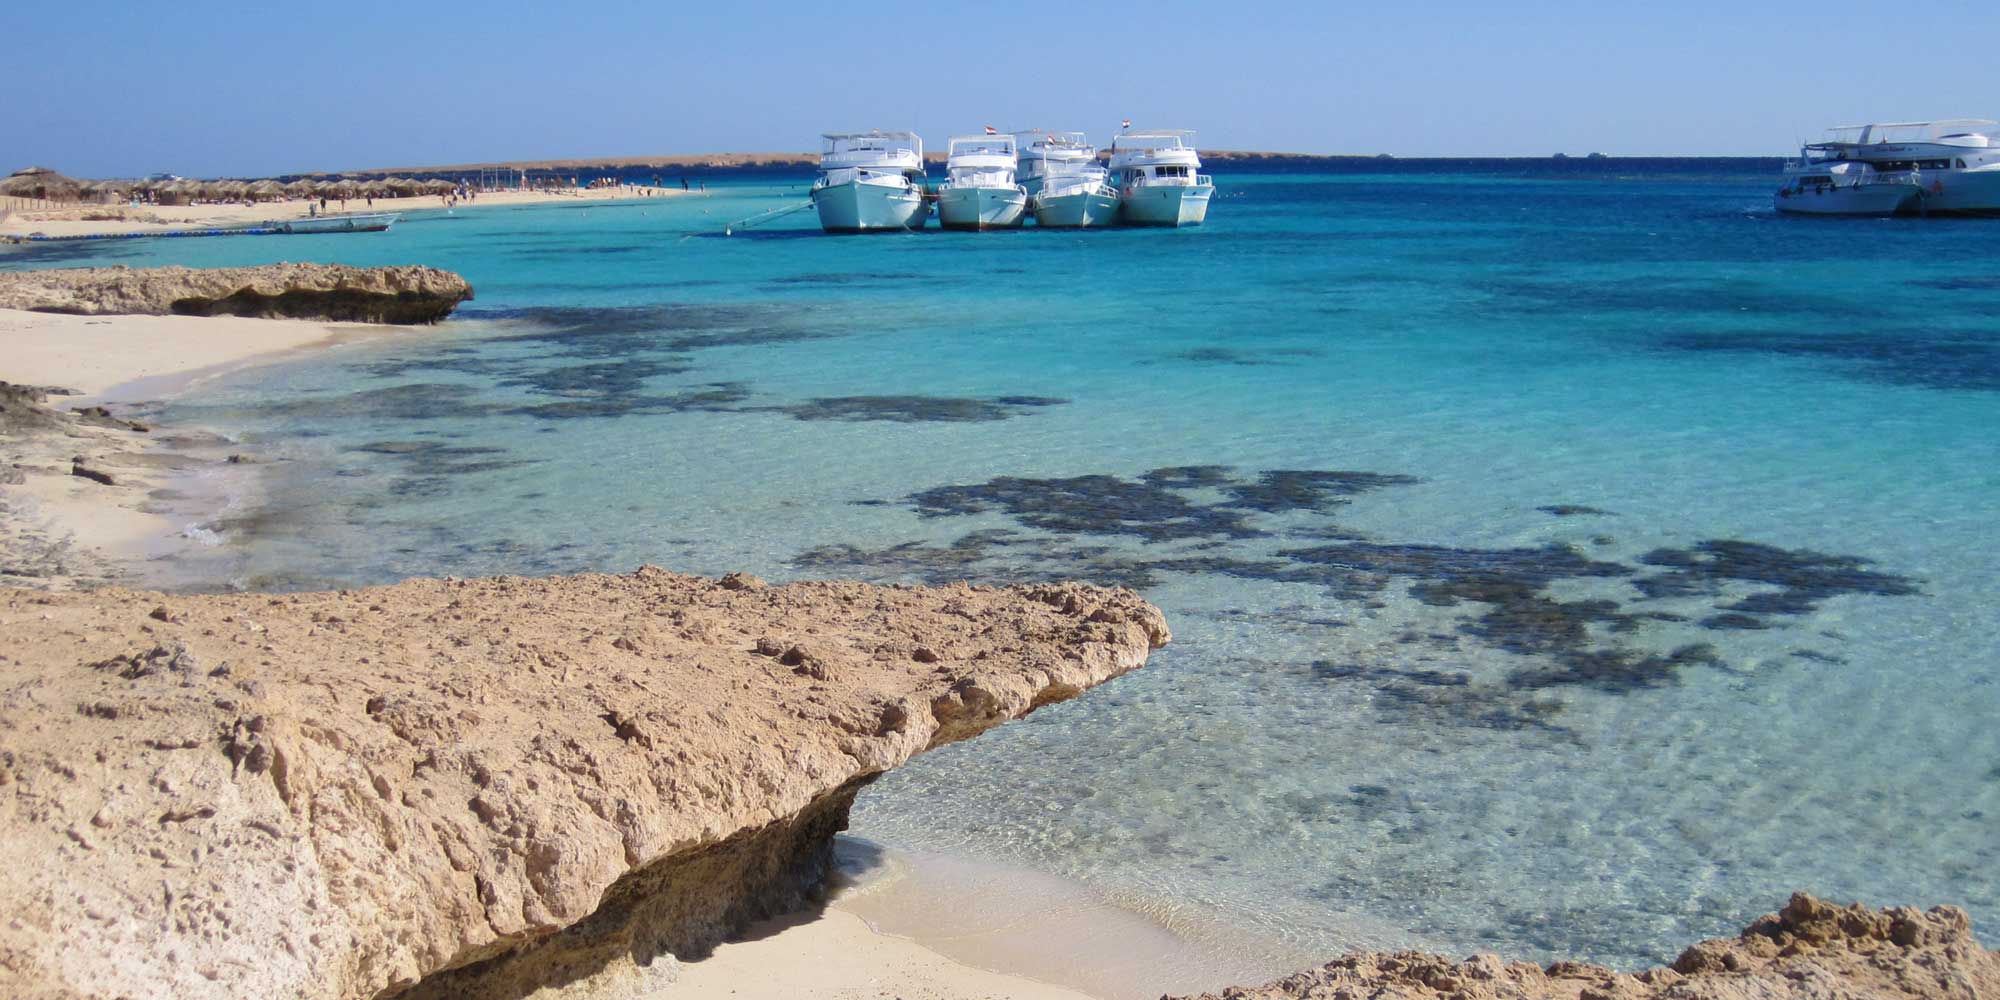 Paradise Island Hurghada